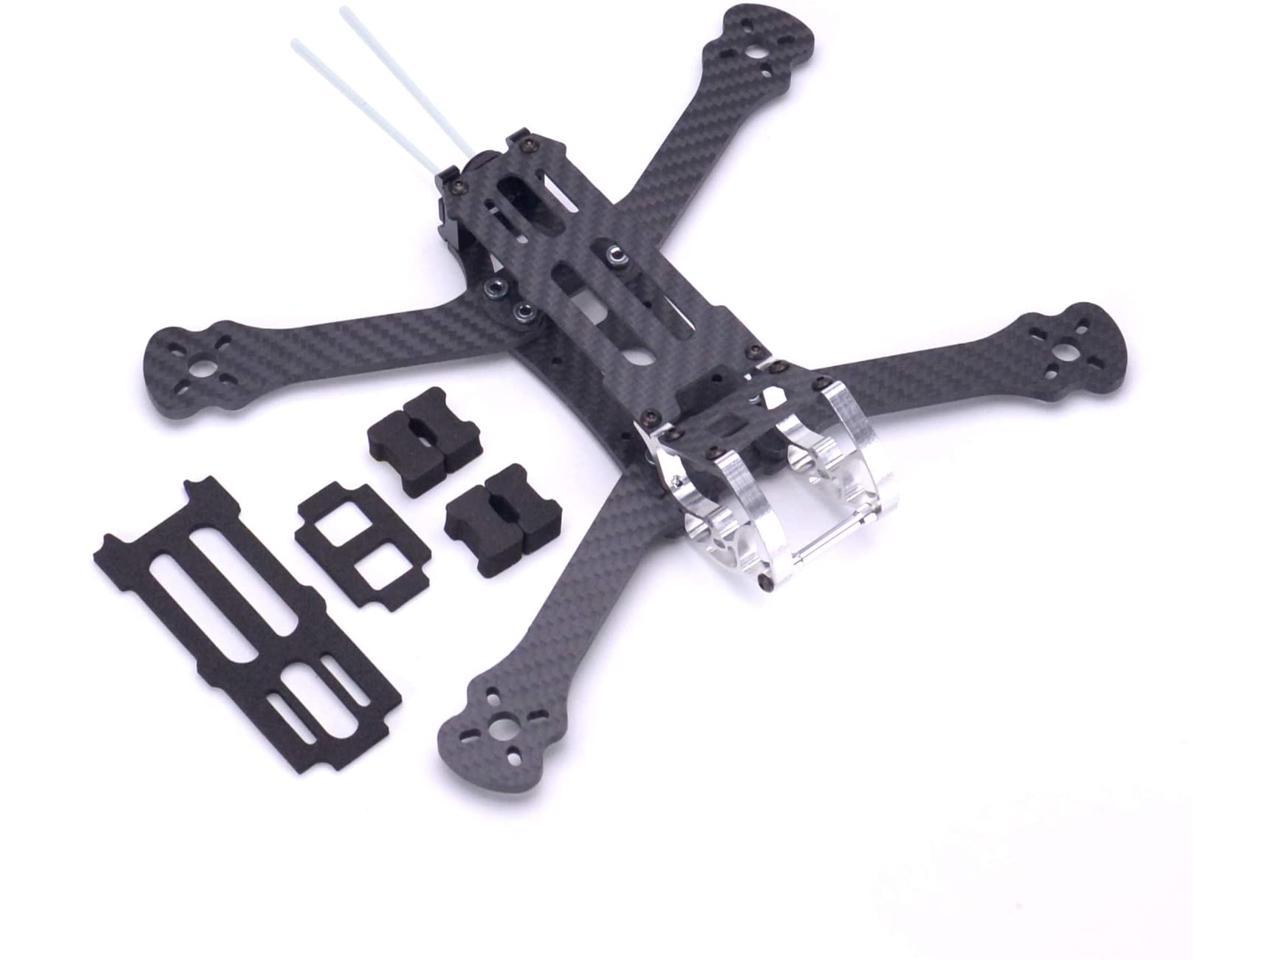 FPVKing 163mm FPV Racing Drone Frame 3 Inch Carbon Fiber Quadcopter Frame Kit Lipo Battery Strap